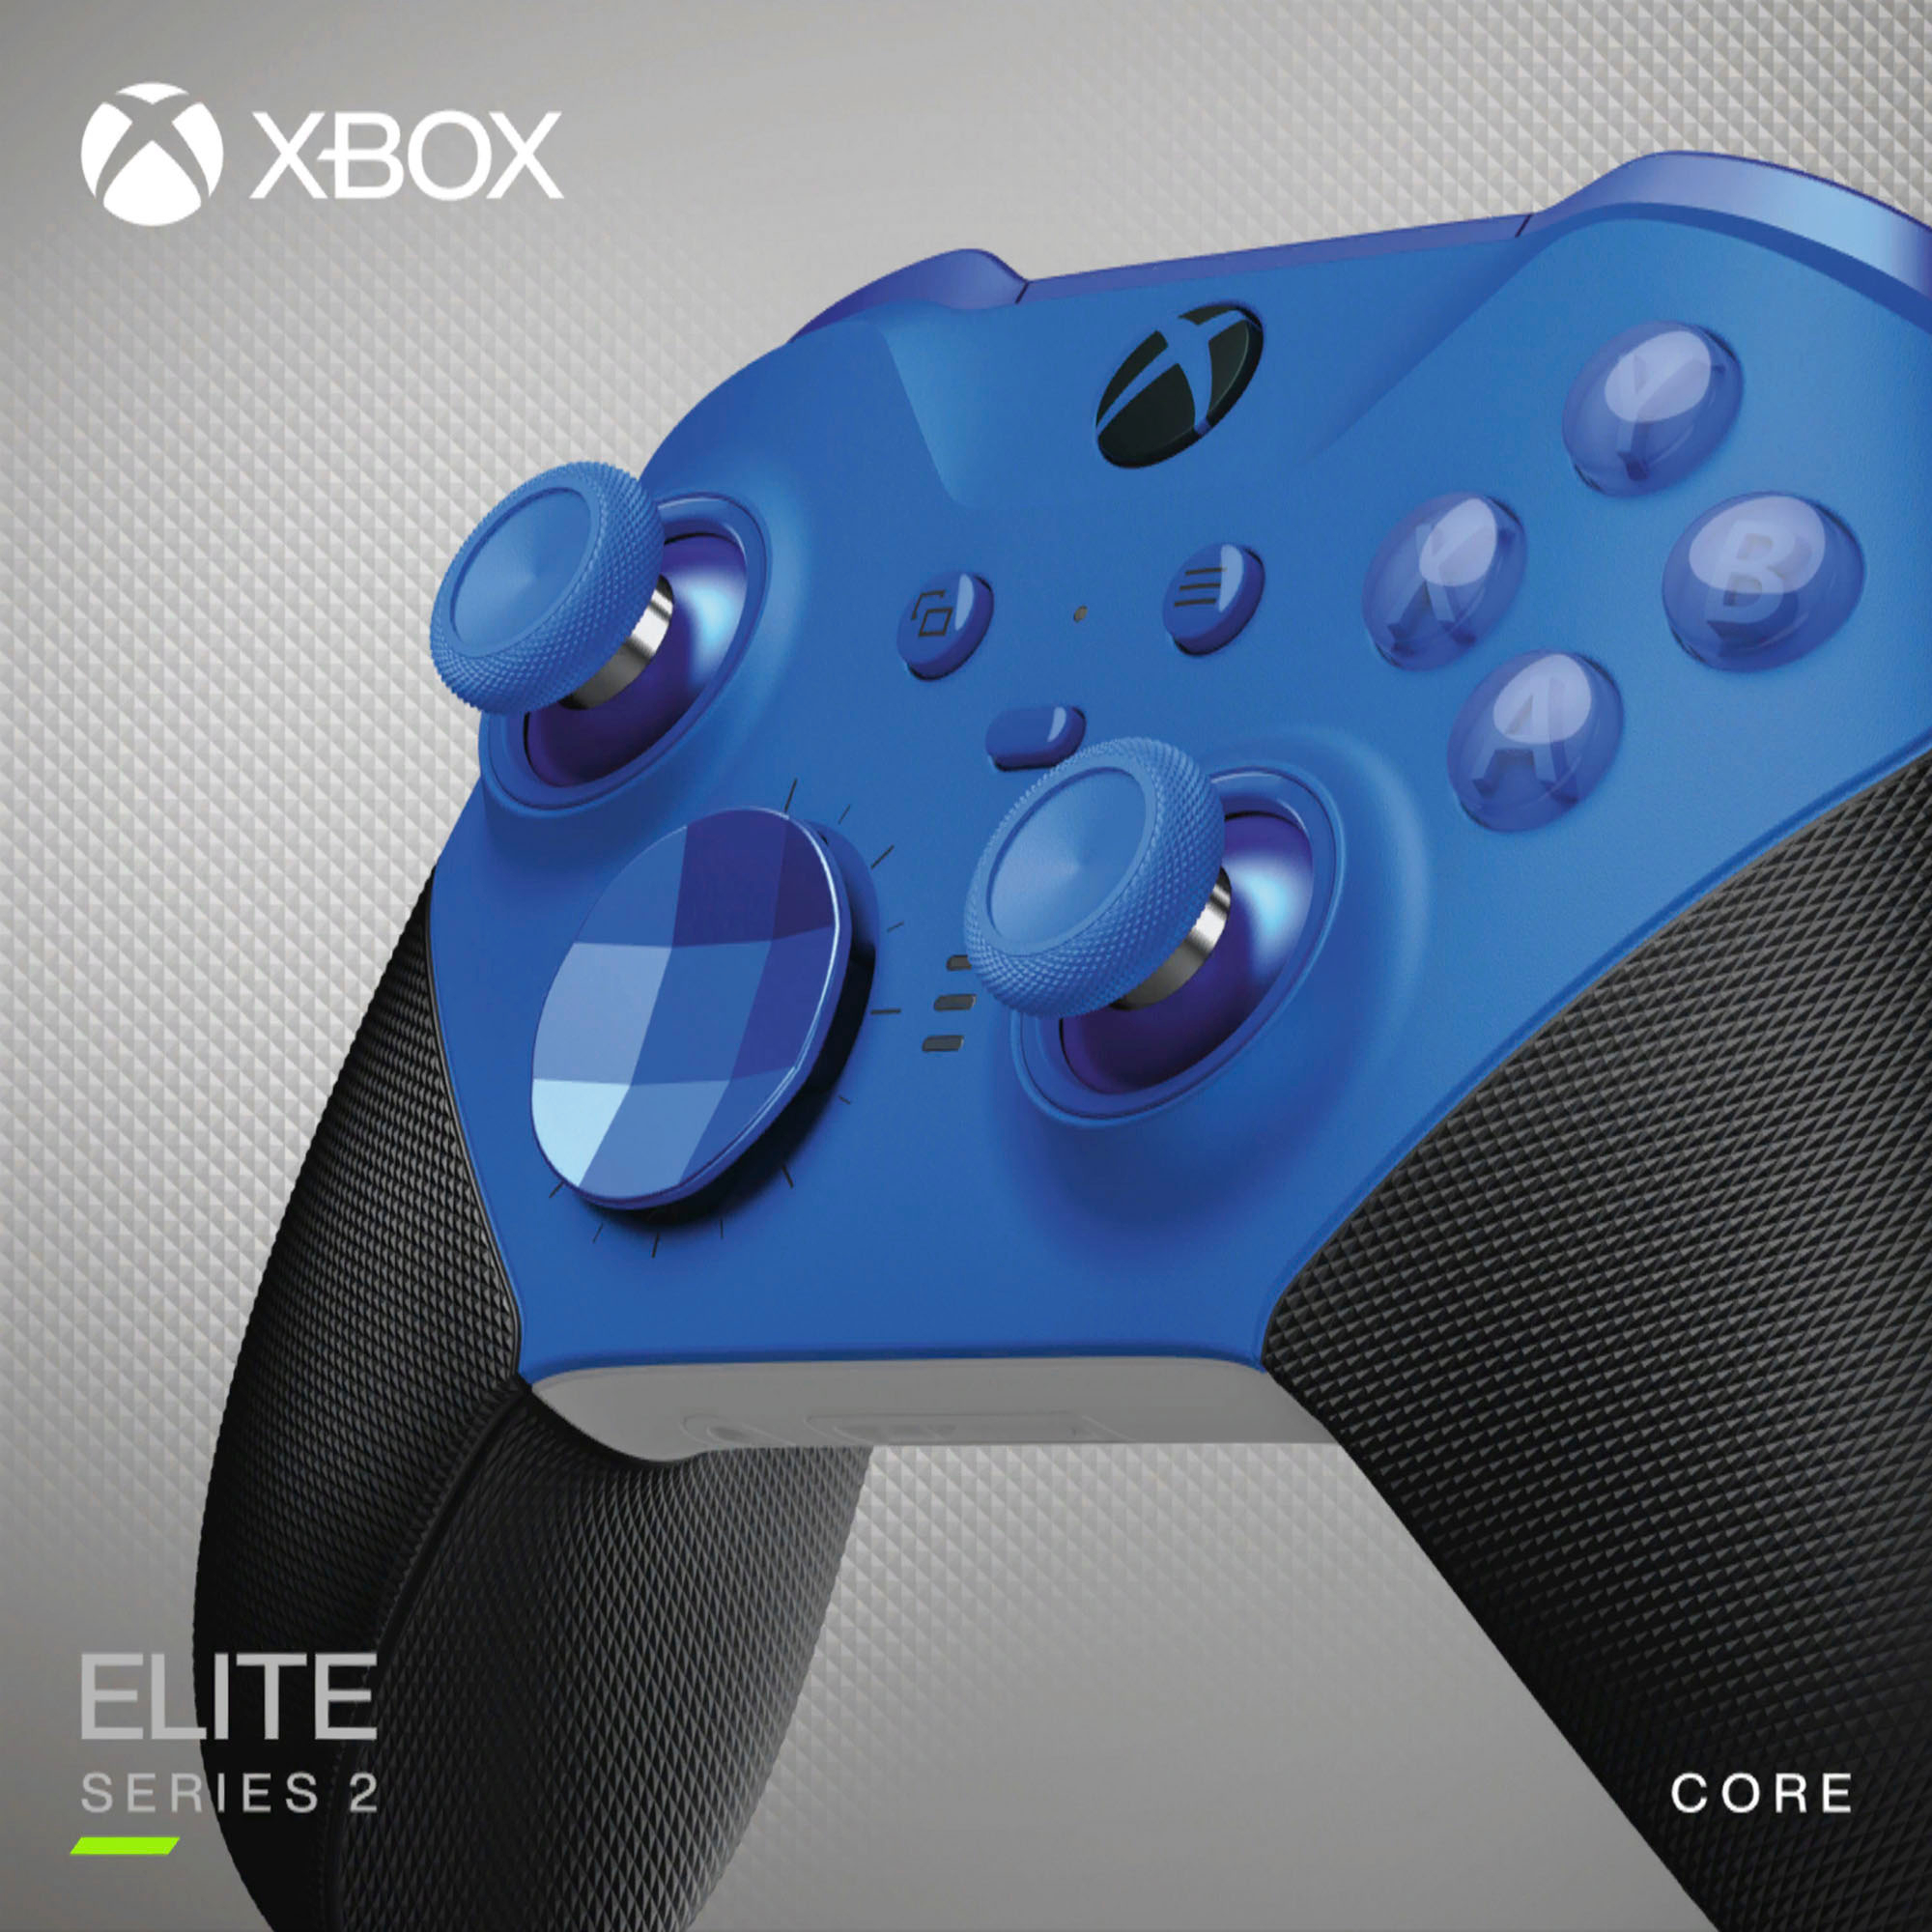 Microsoft Elite Wireless Controller Series 2 for Xbox Series X